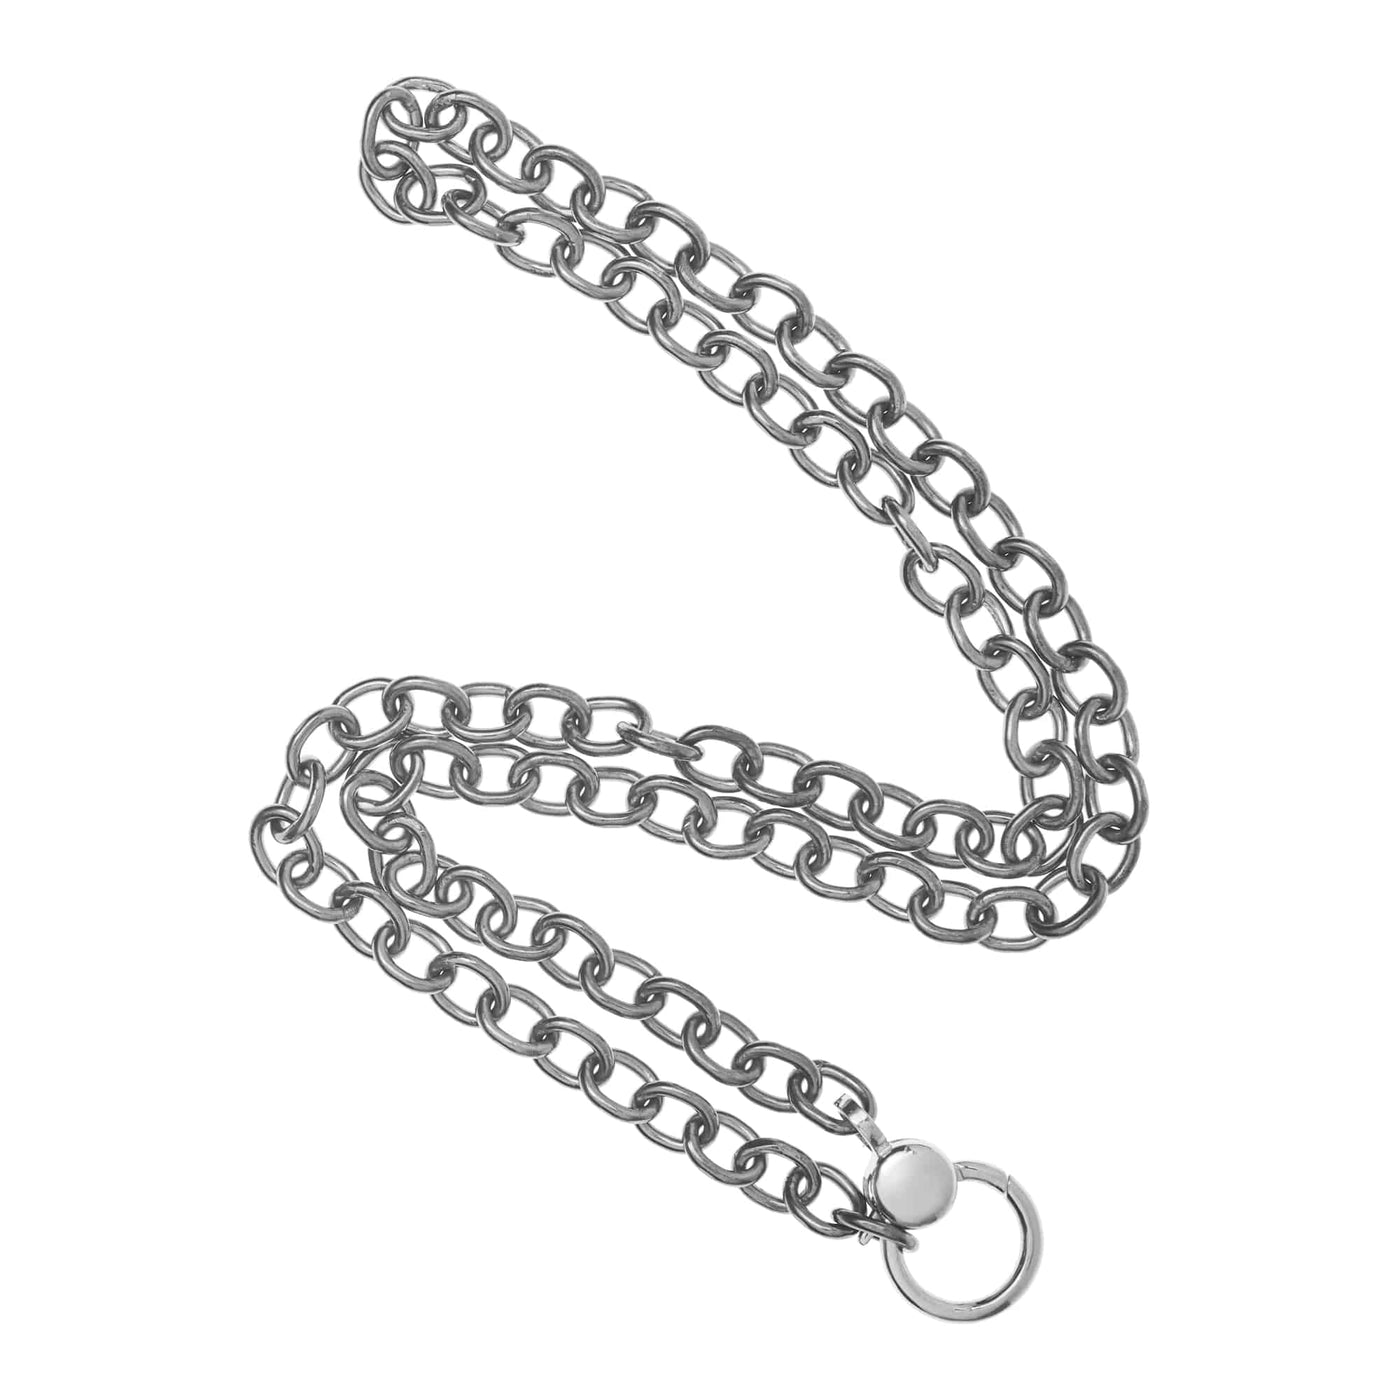 Round link chain large gold lock SLV-W14 - Chains - Ileana Makri store